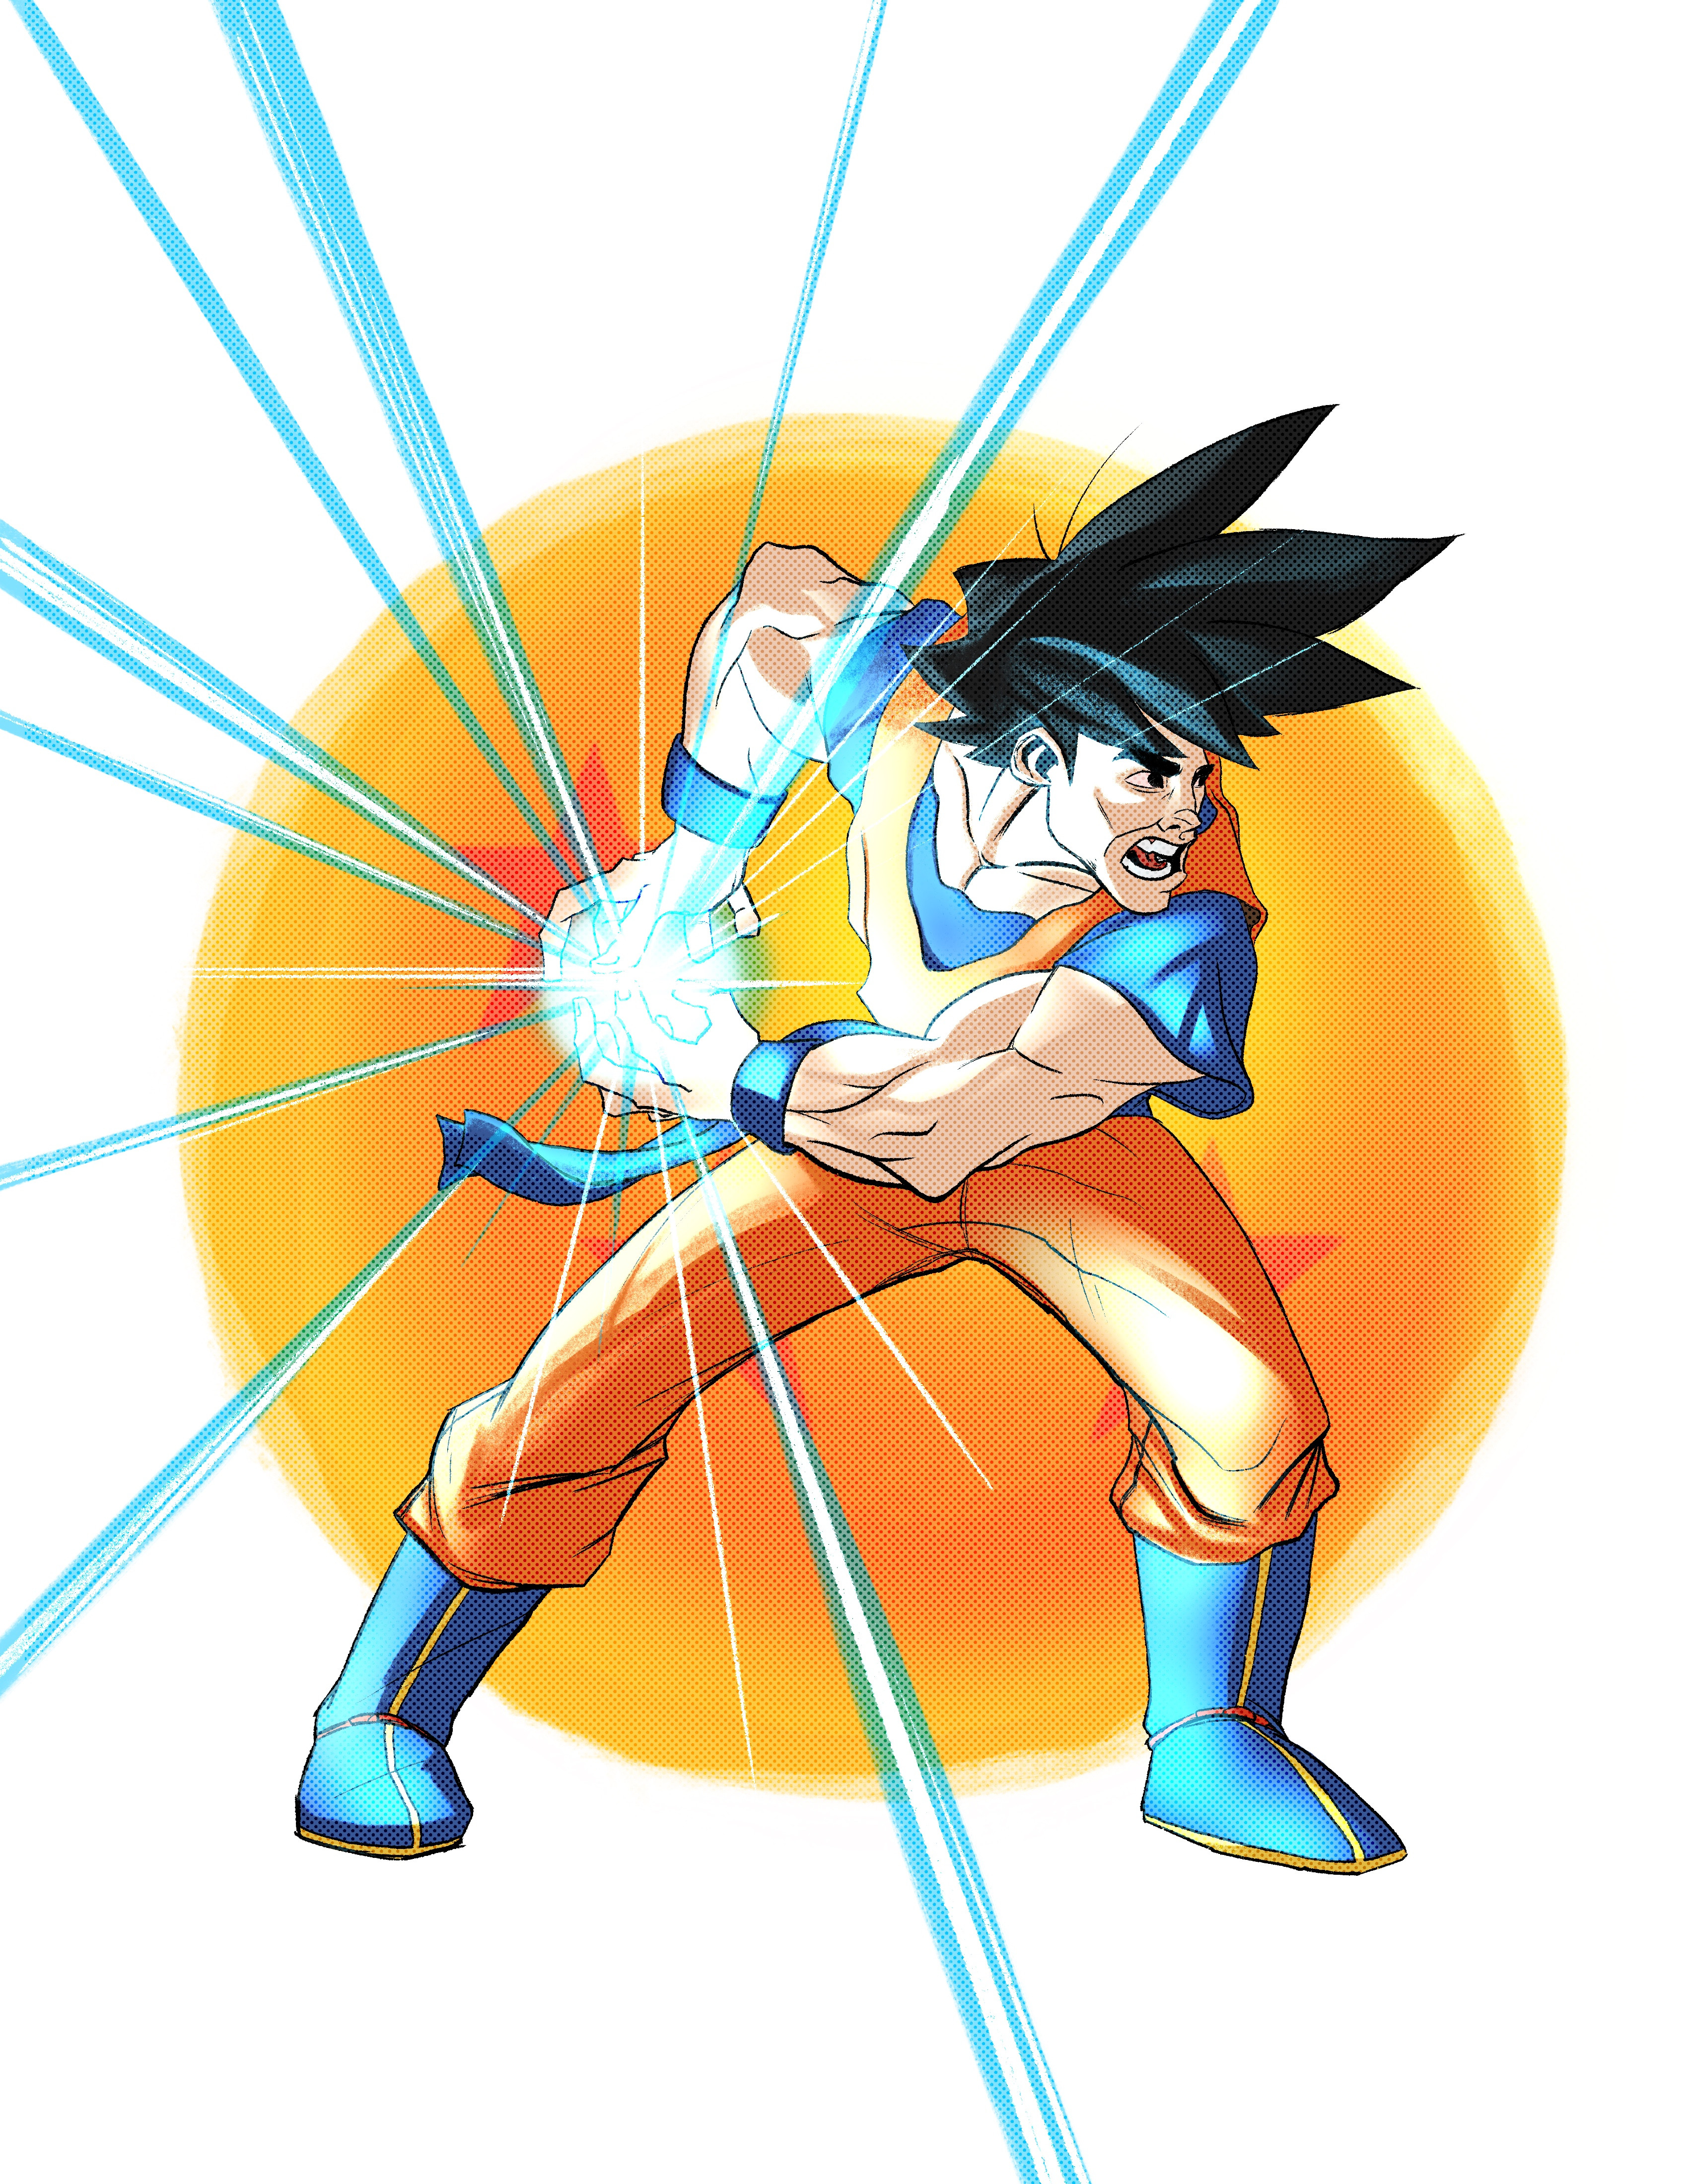 Goku - Digital in Procreate